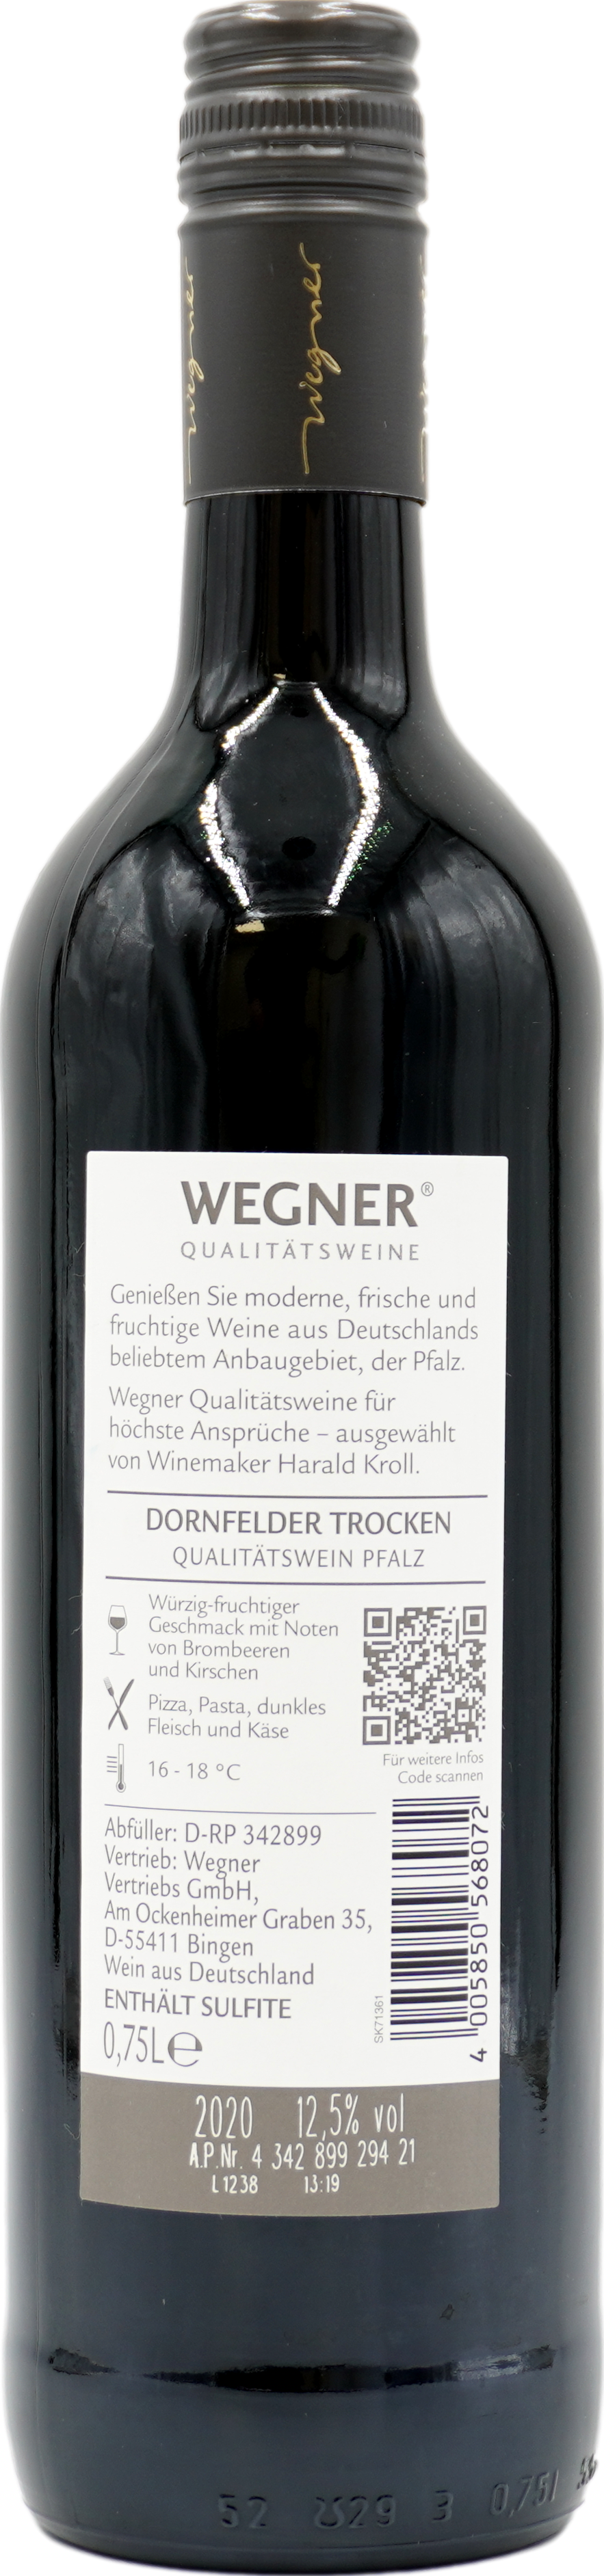 Wegner Dornfelder Pfalz QbA 2005 trocken rot jetzt online bestellen &  liefern lassen! | KACHOURI Getränke-Service